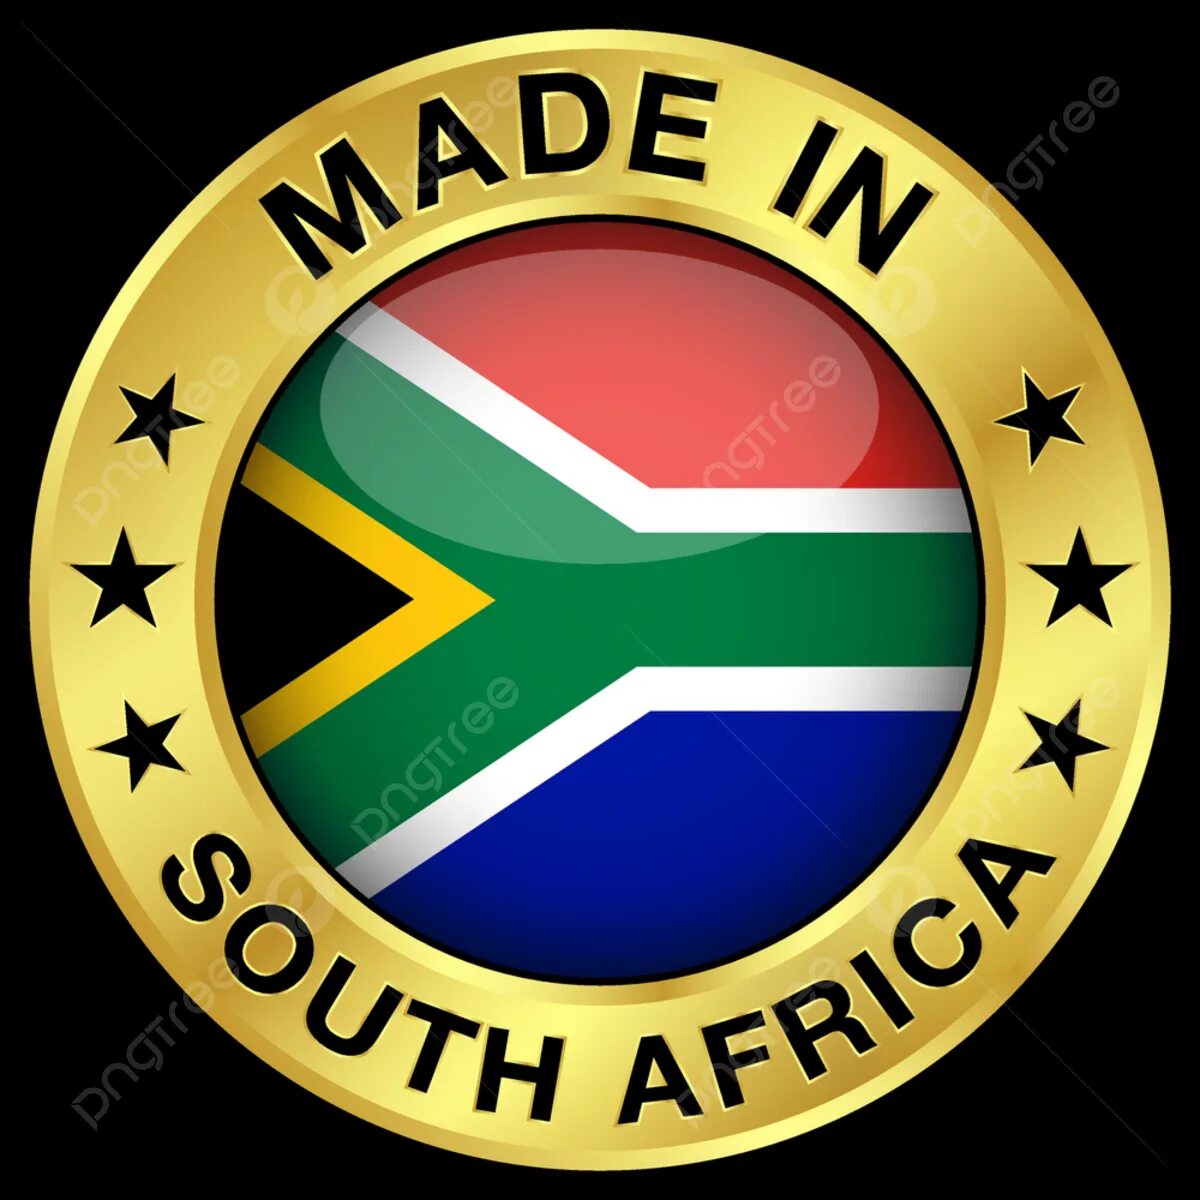 Made in africa. Nedbank в ЮАР лого.